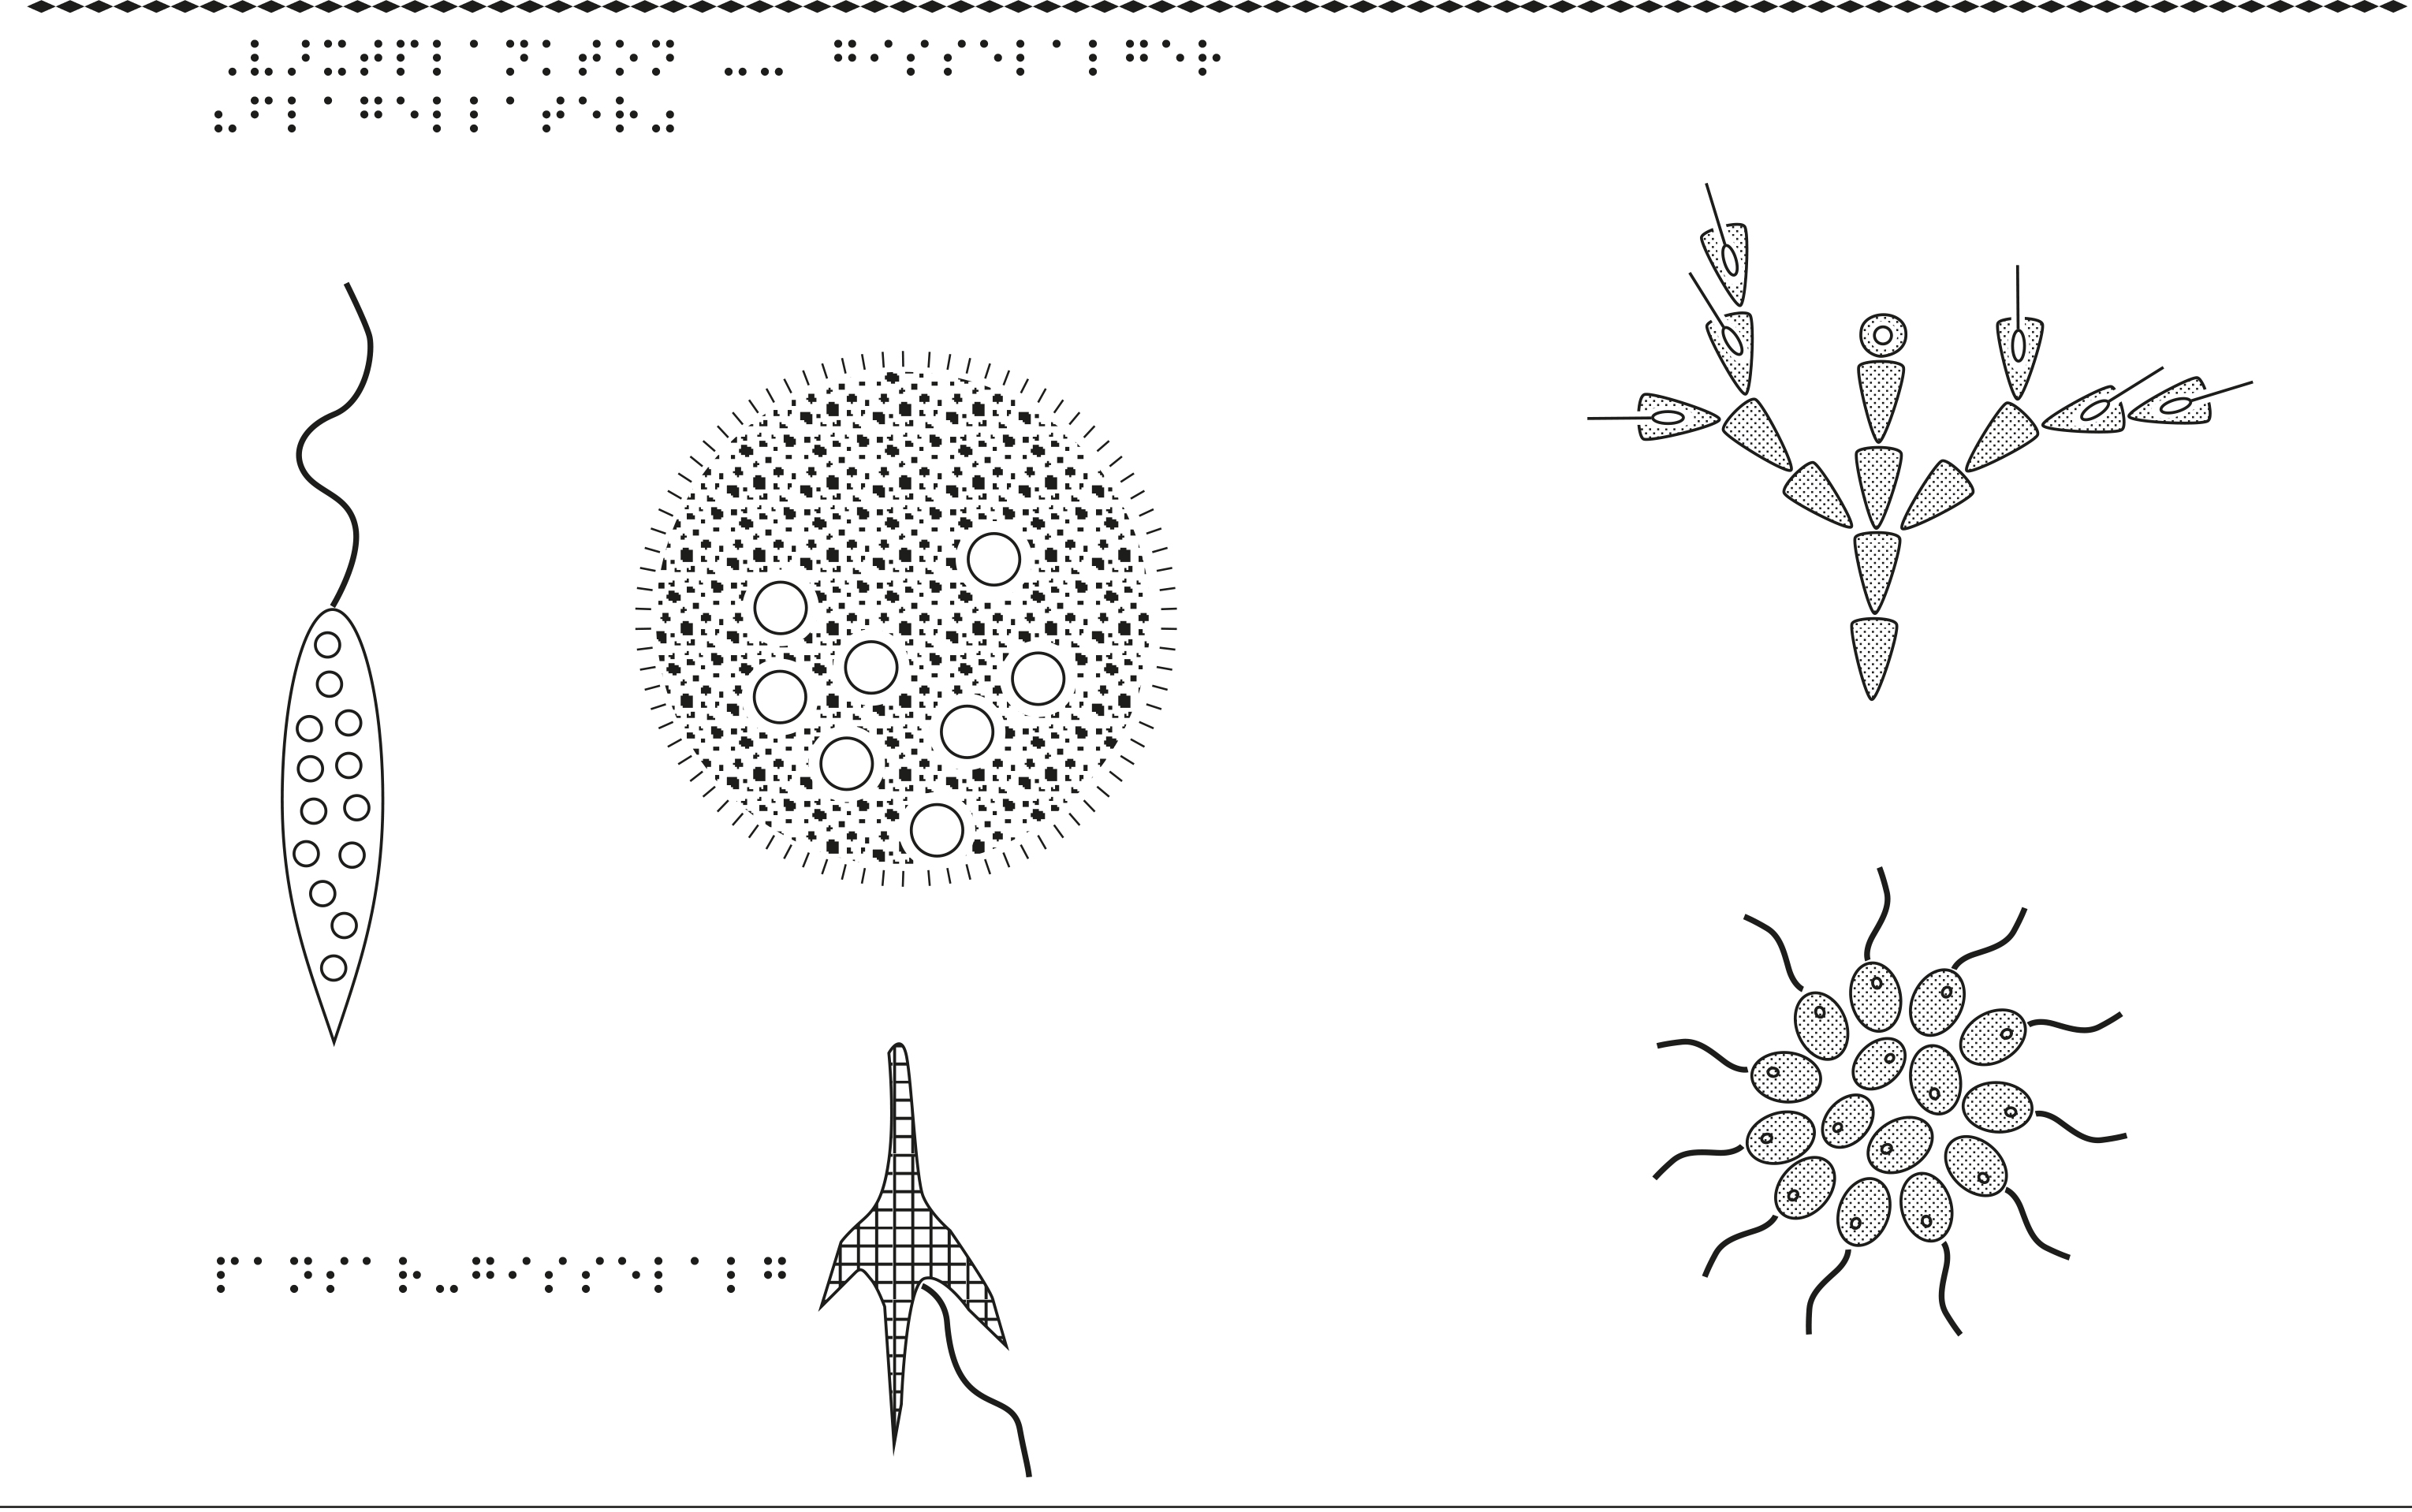 Växtplankton, gisselalger.